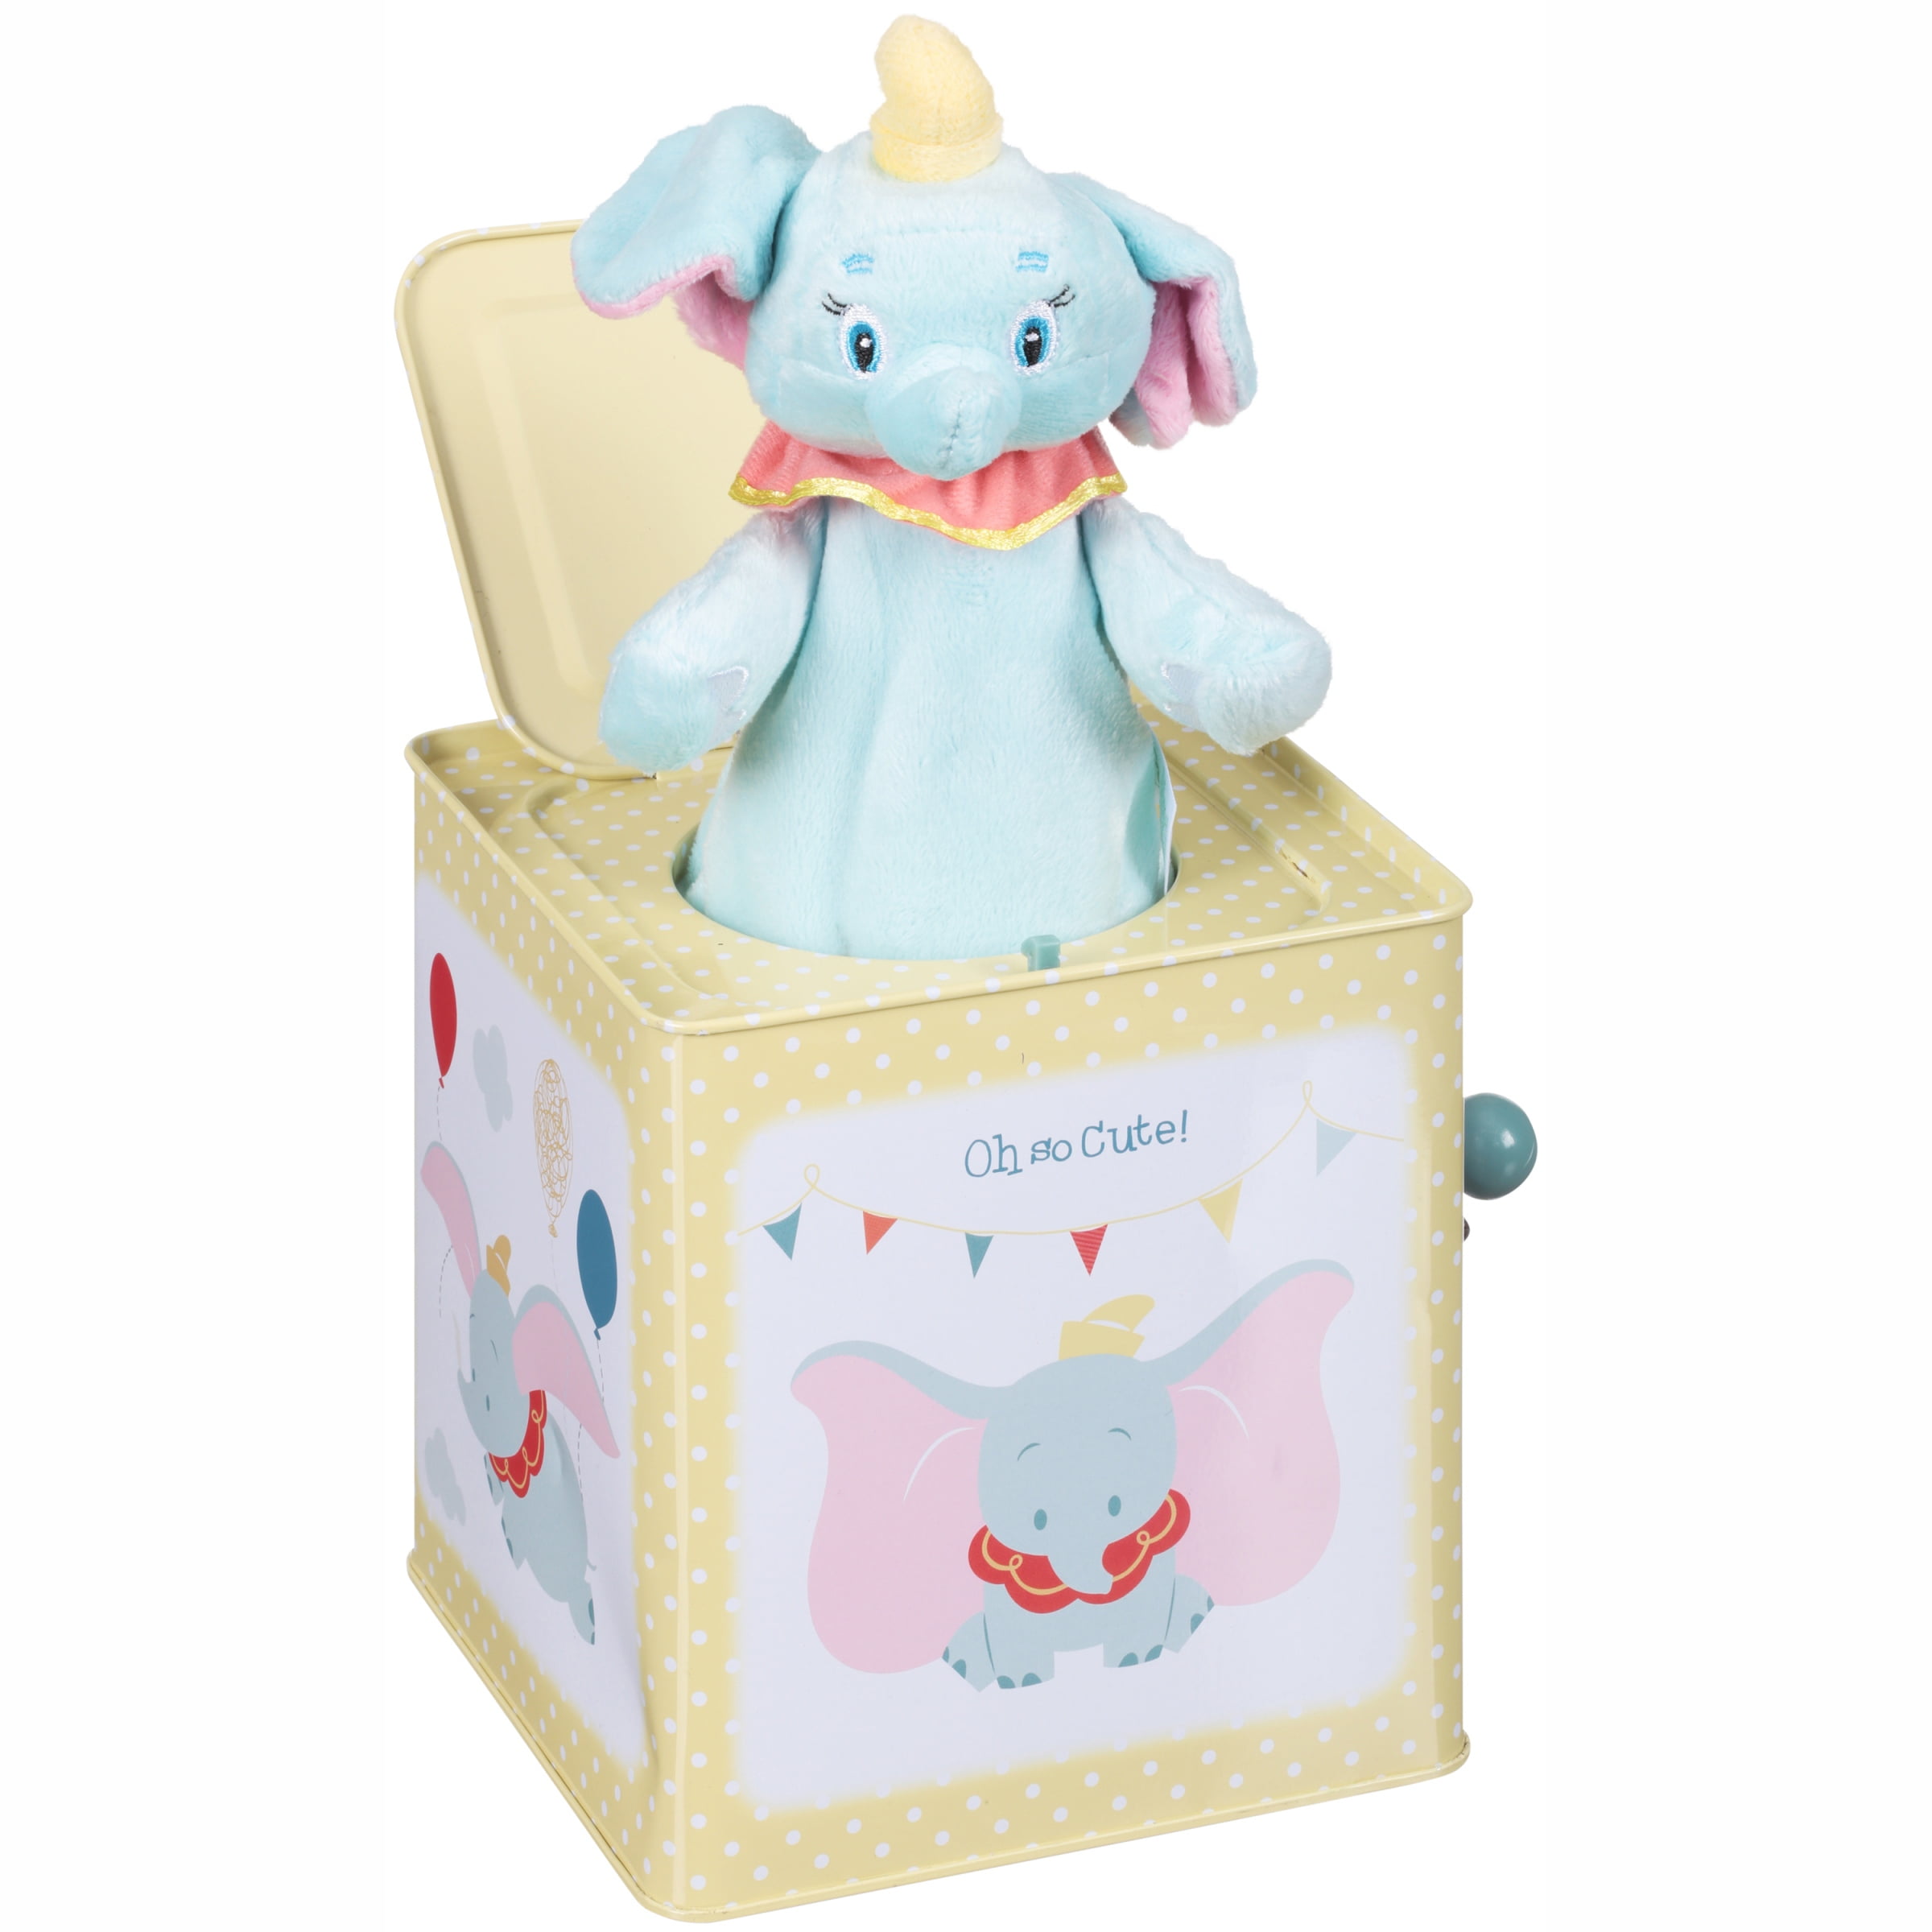 Disney Baby Dumbo Jack-in-the-Box - Walmart.com